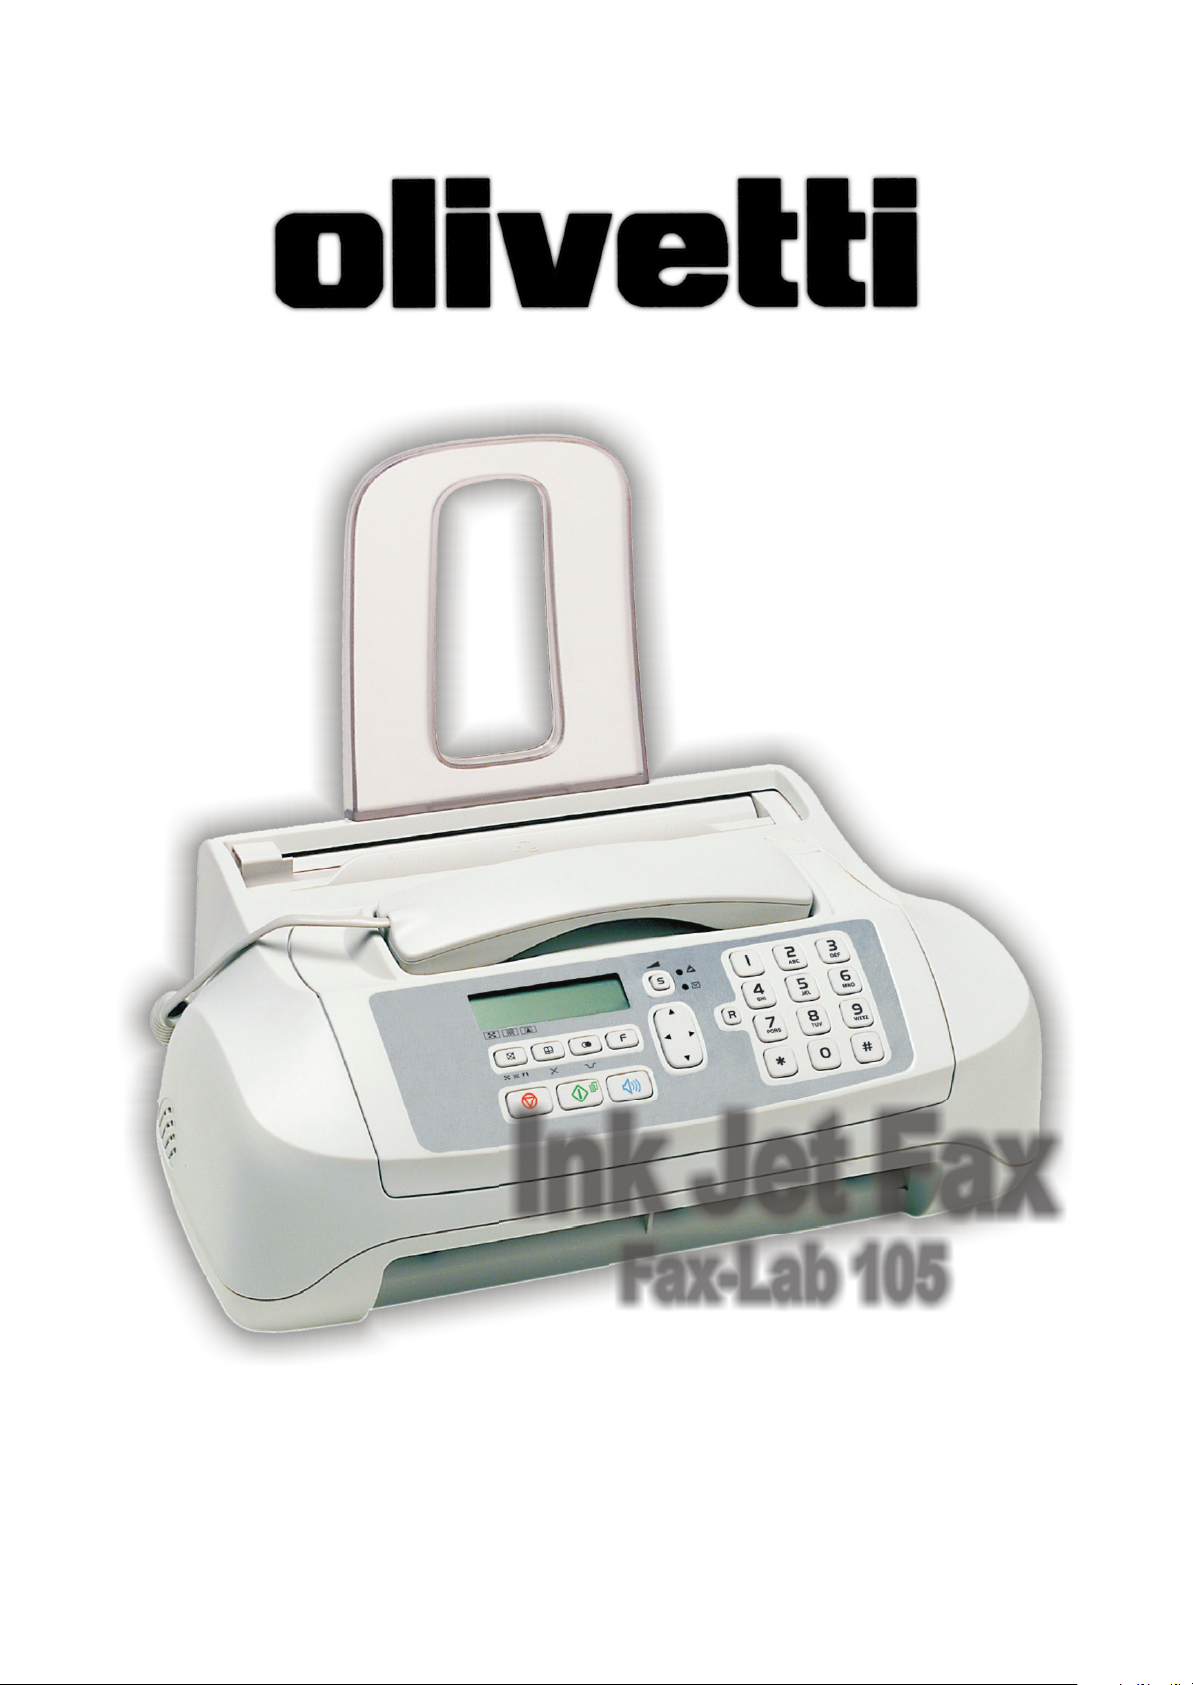 fax lab 105